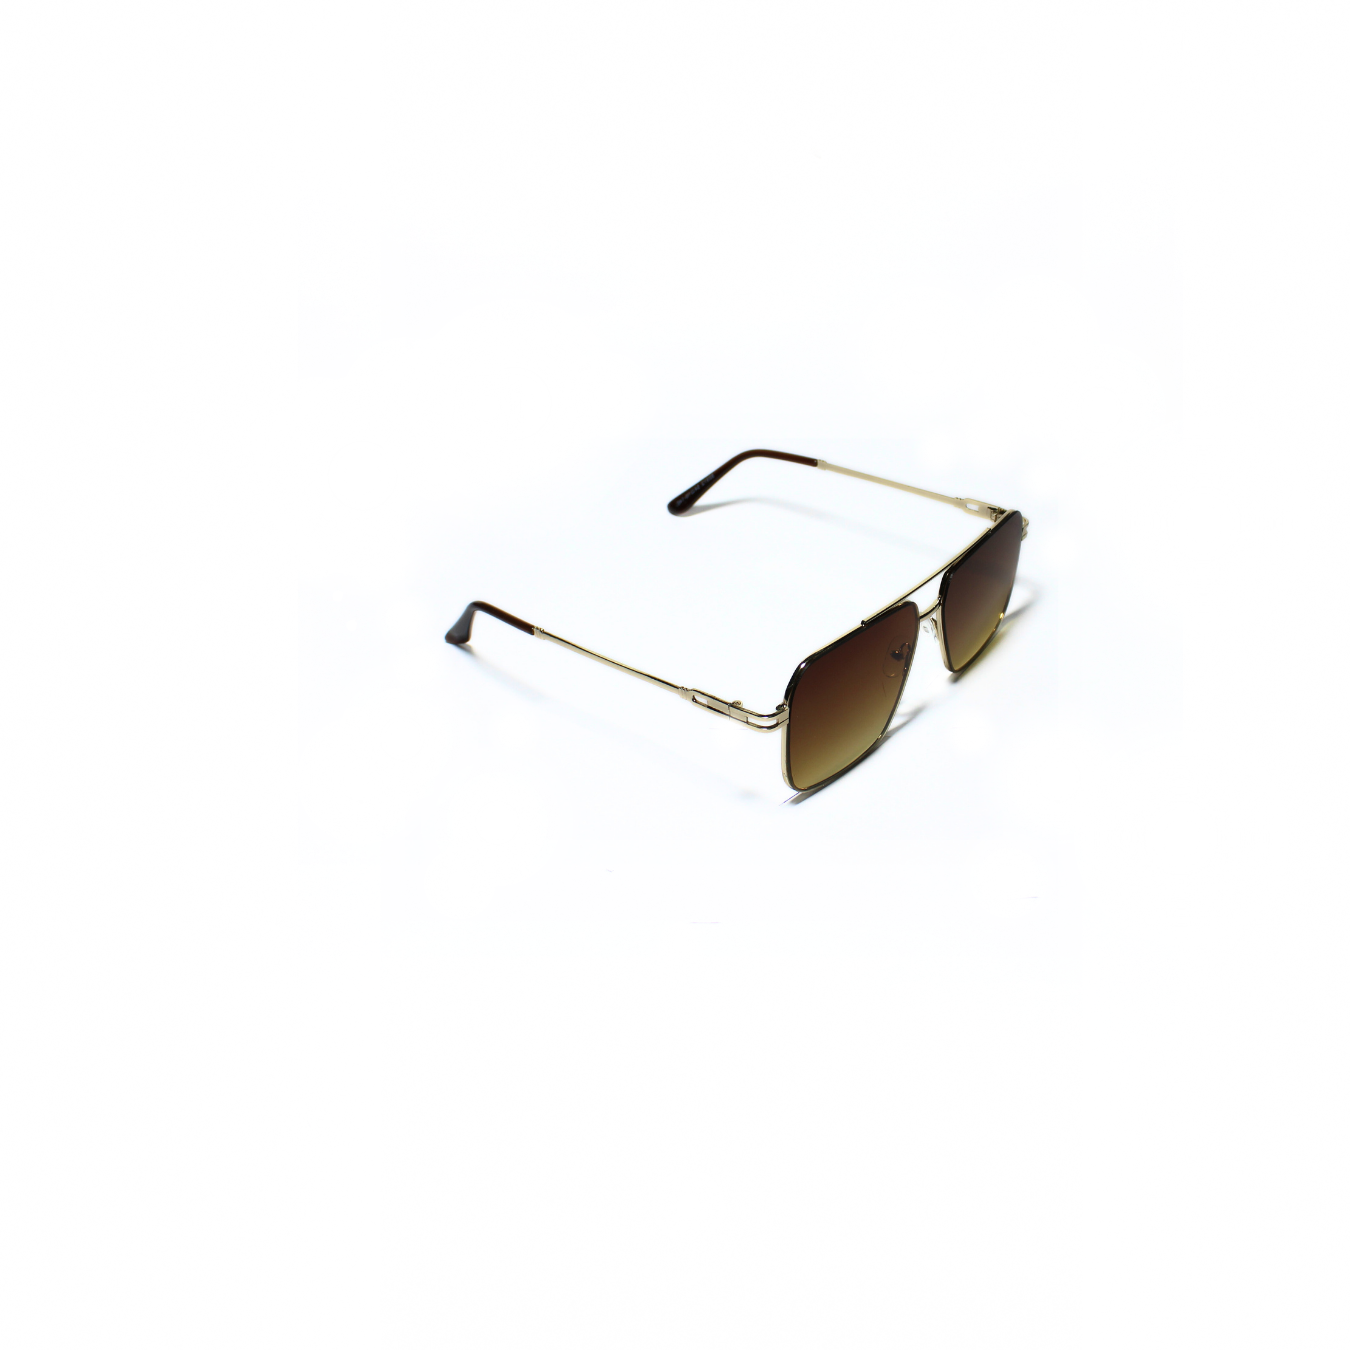 ARTHUR-II//006 I Sunglasses for Women - Specsview